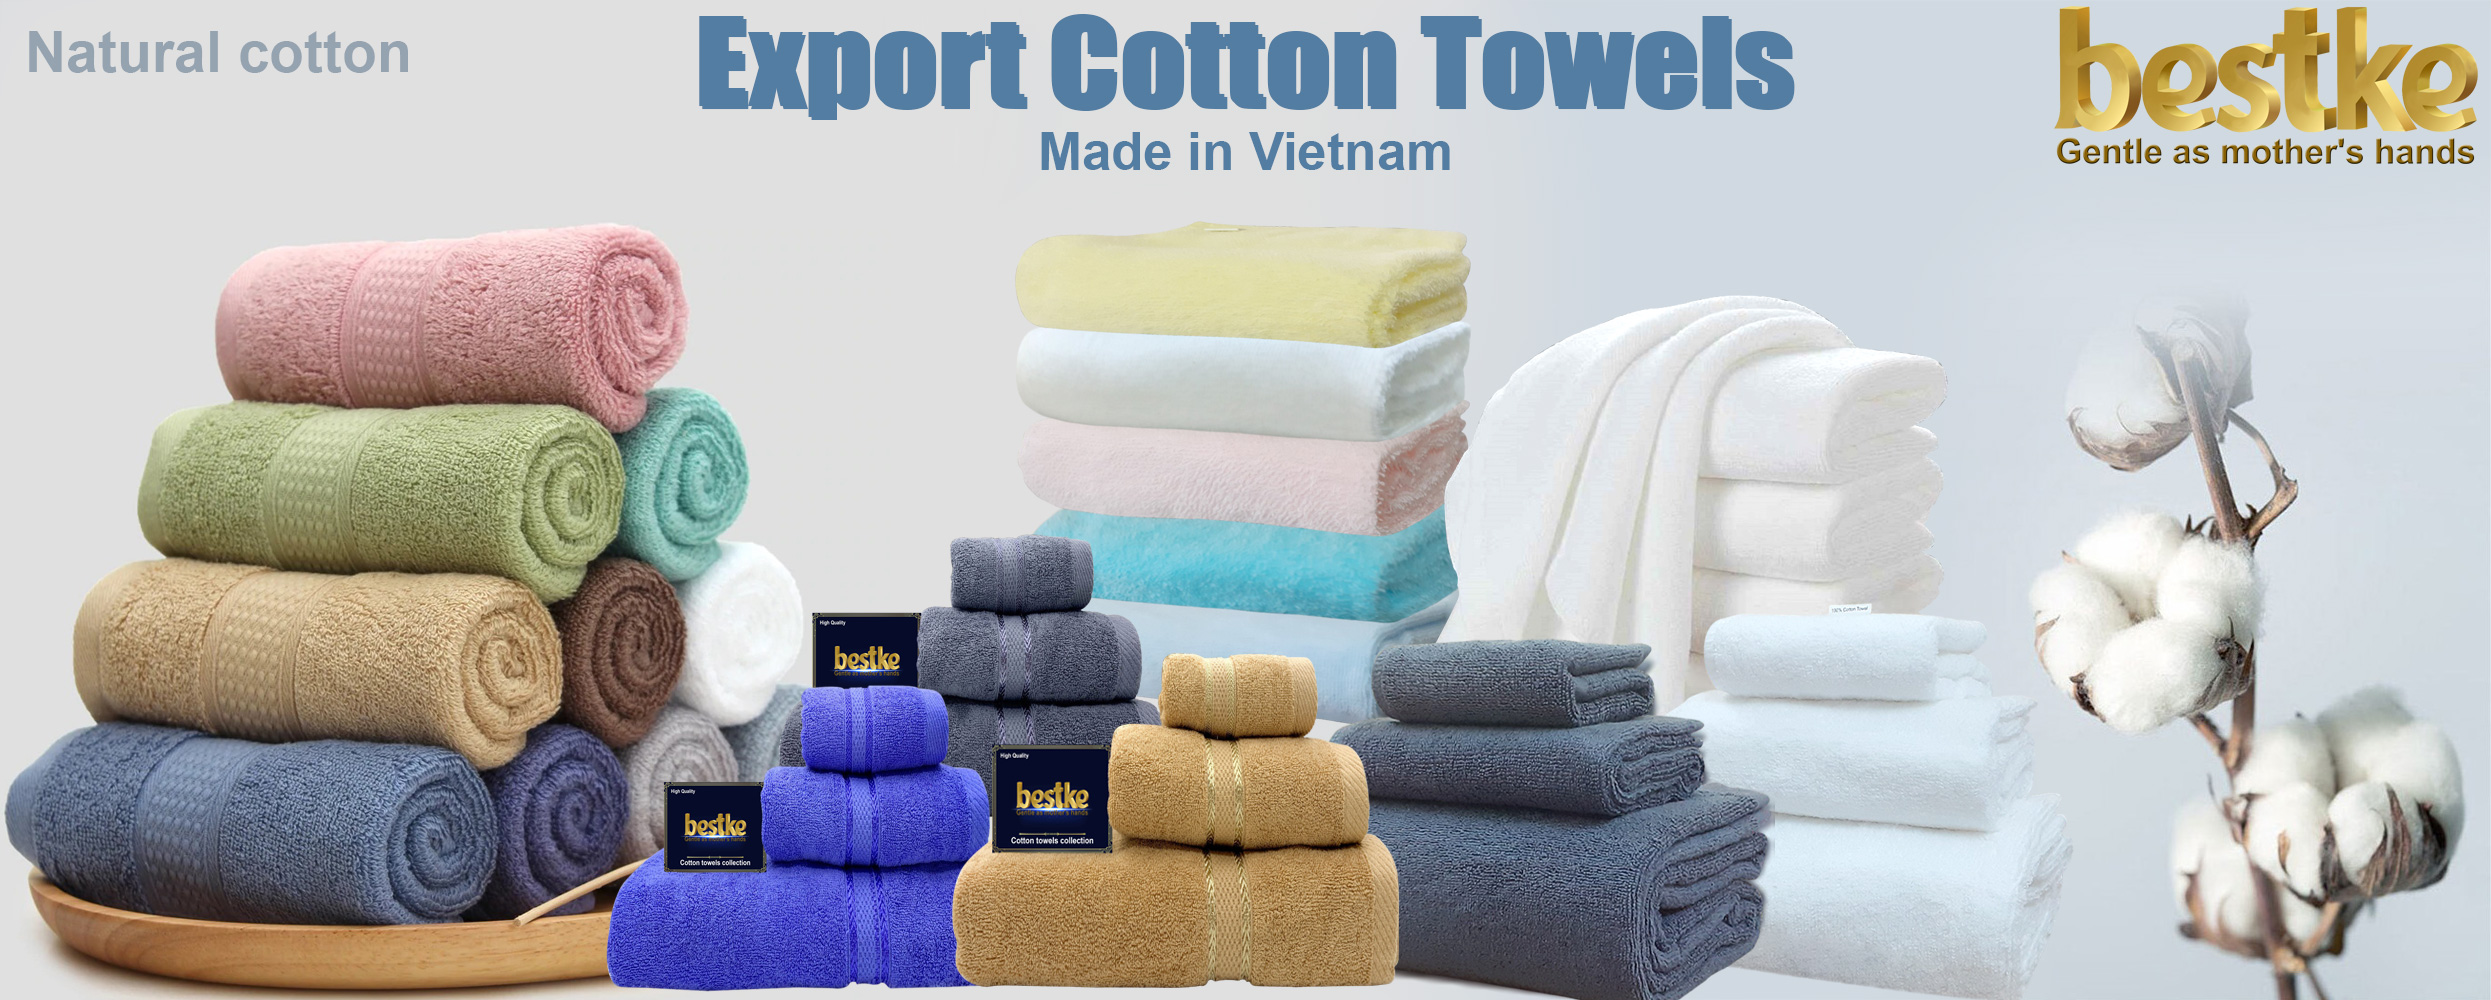 Combo 7 cái Khăn Mặt bestke 100% Cotton Xuất Khẩu Hàn Quốc màu dark blue, towels manufacturer, size 34*34cm = 60g/cái